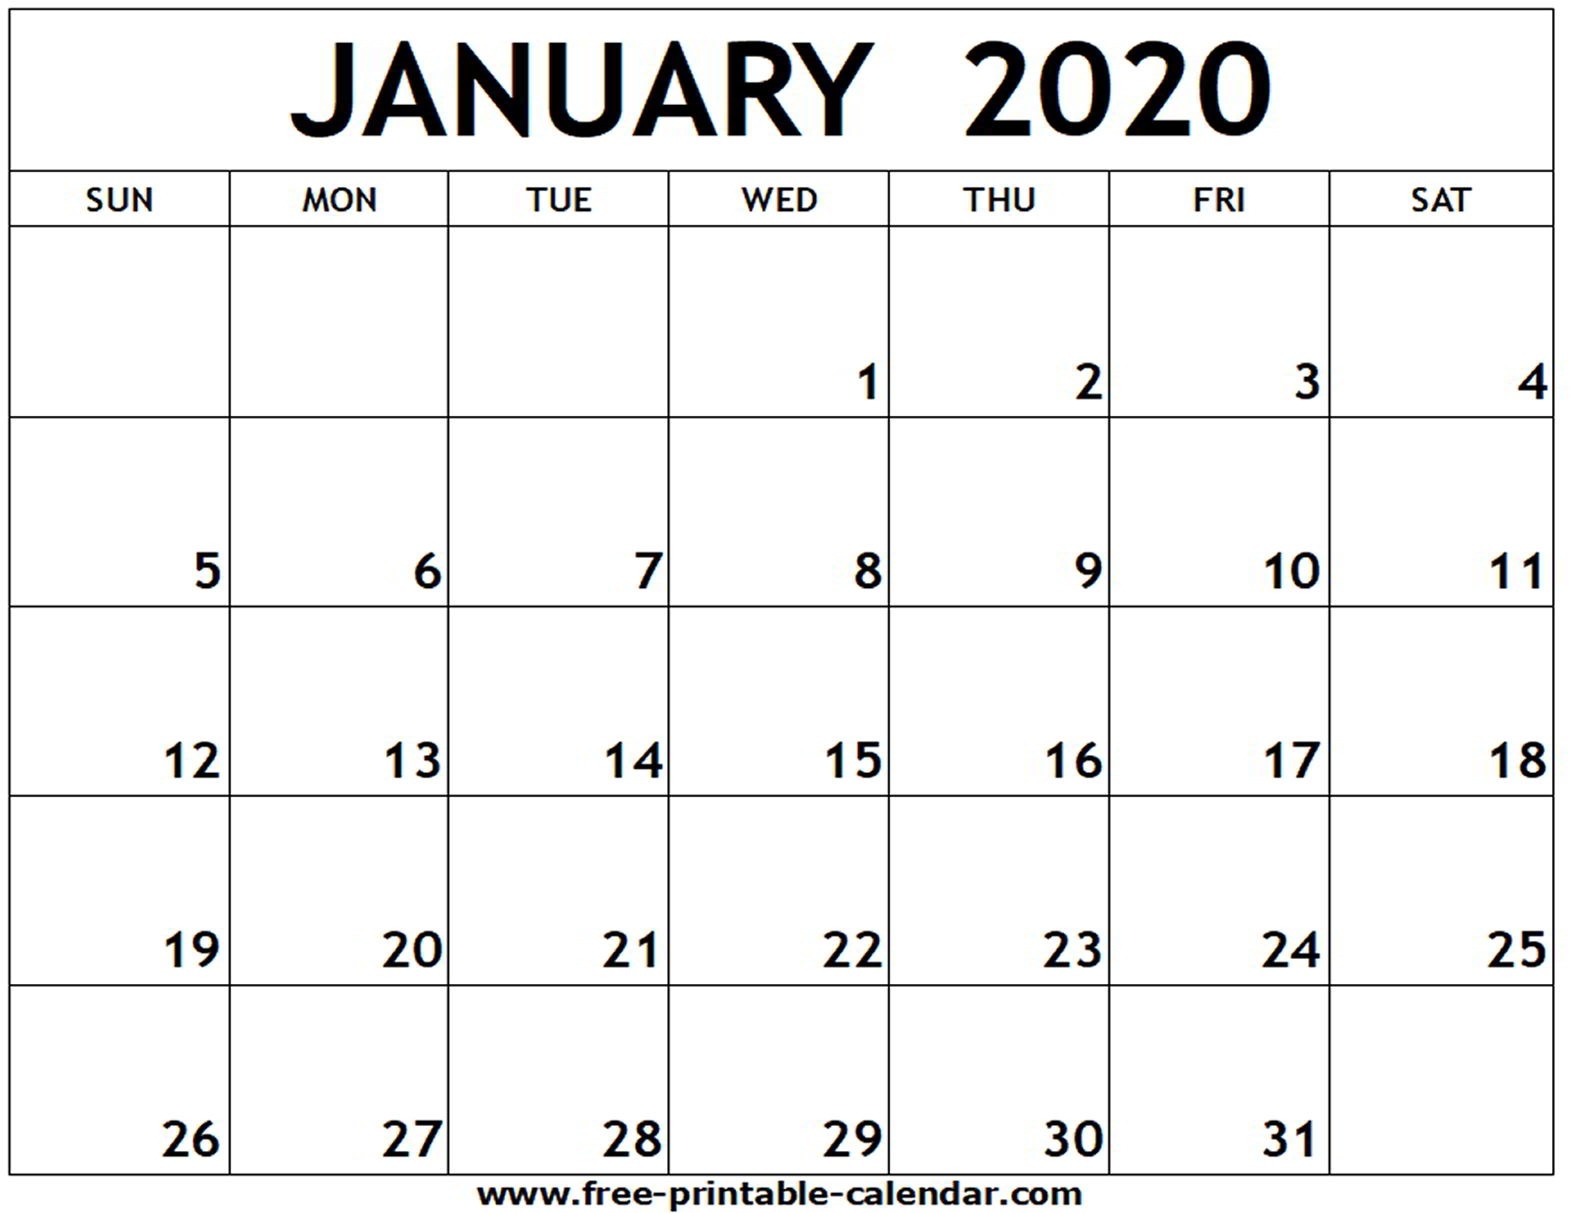 January 2020 Printable Calendar - Free-Printable-Calendar-Blank January 2020 Calendar